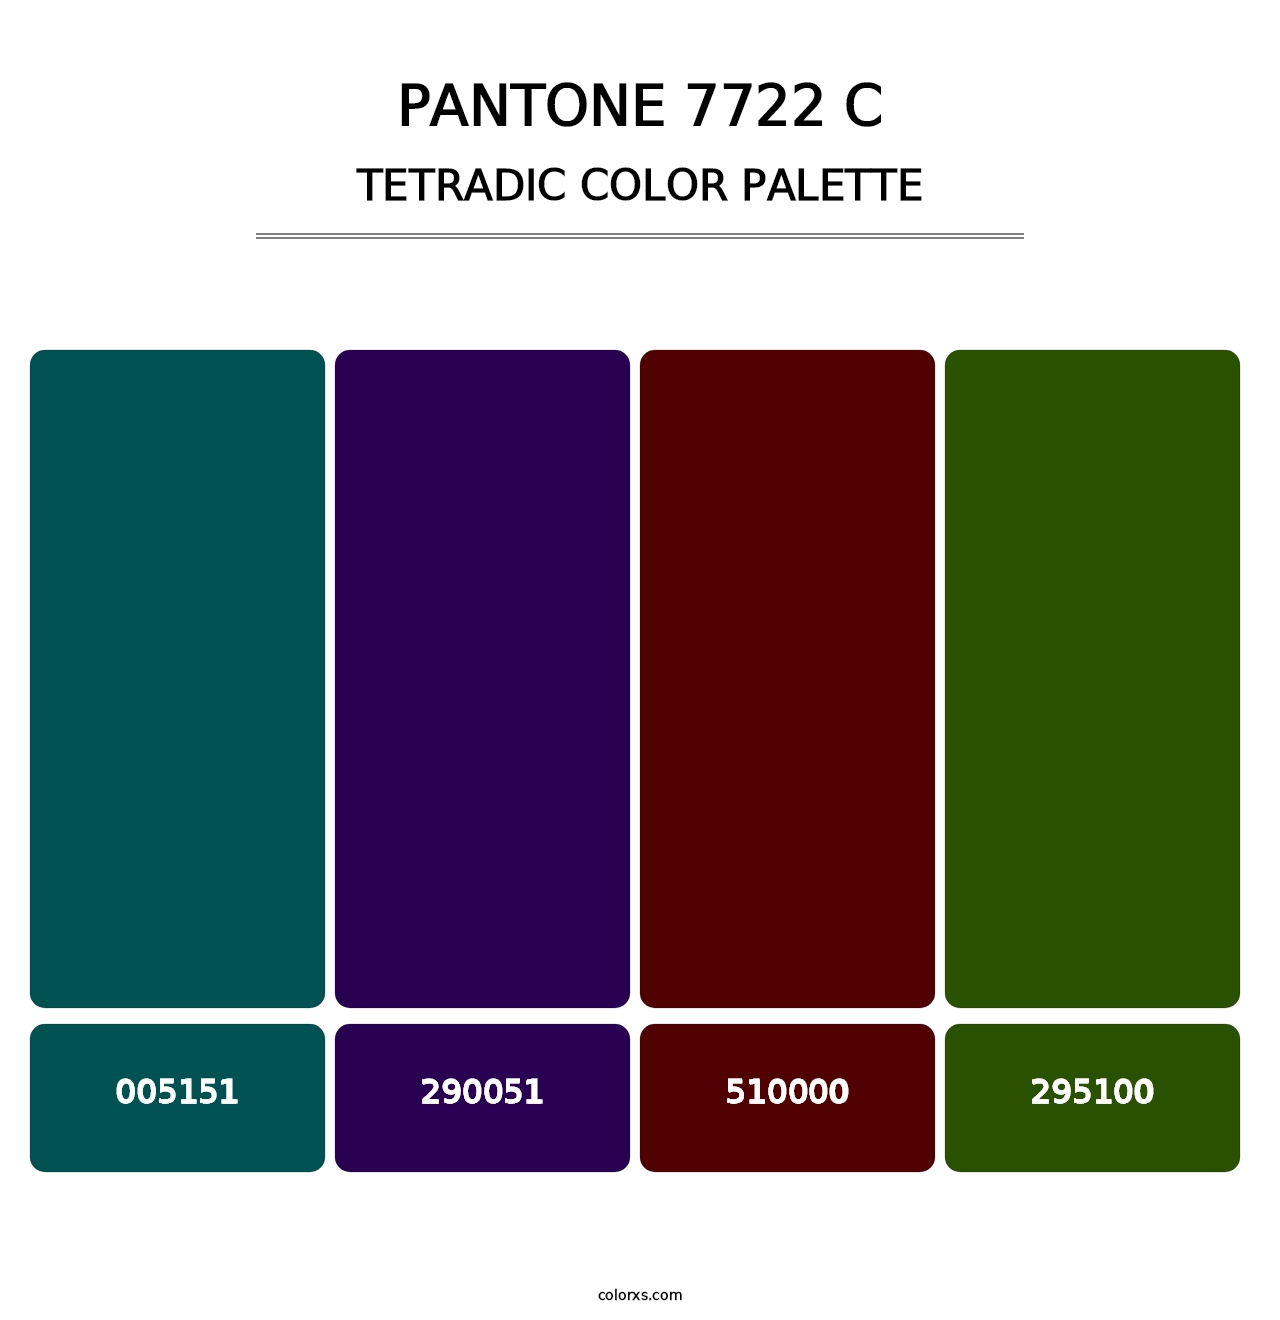 PANTONE 7722 C - Tetradic Color Palette